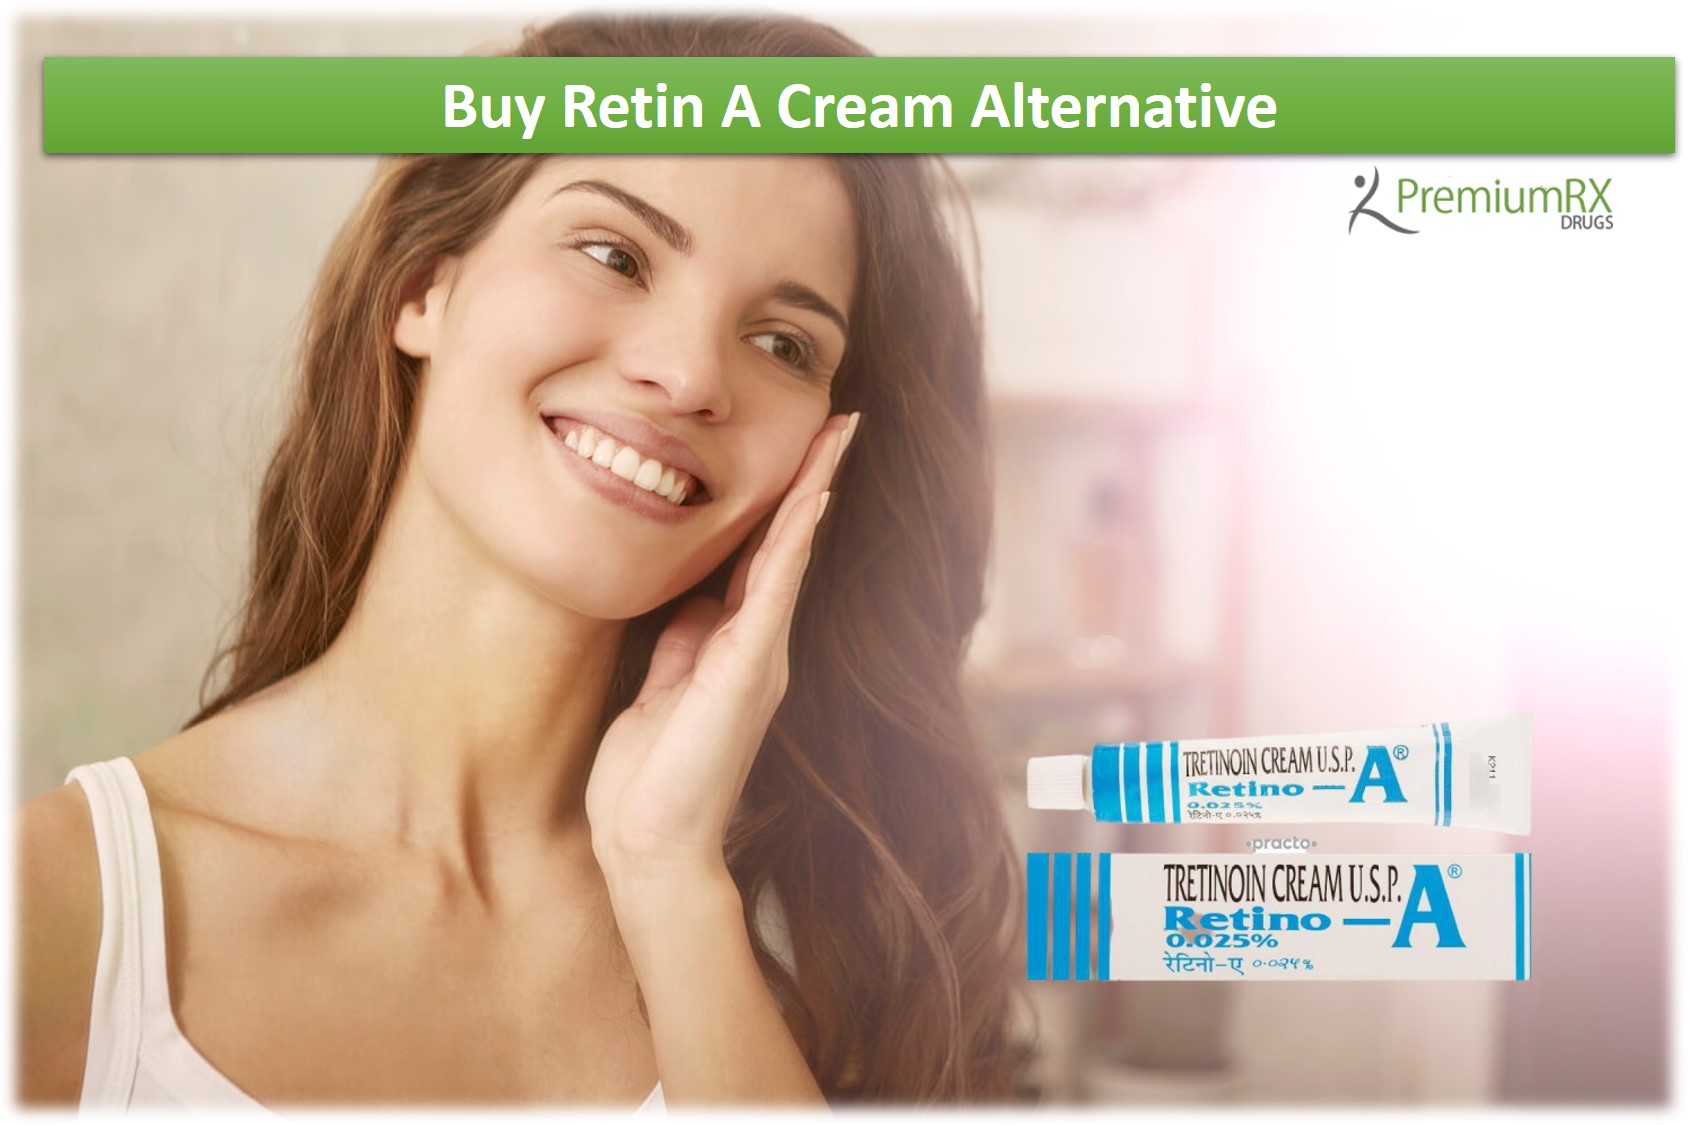 Where To Buy Retin A Cream Alternative